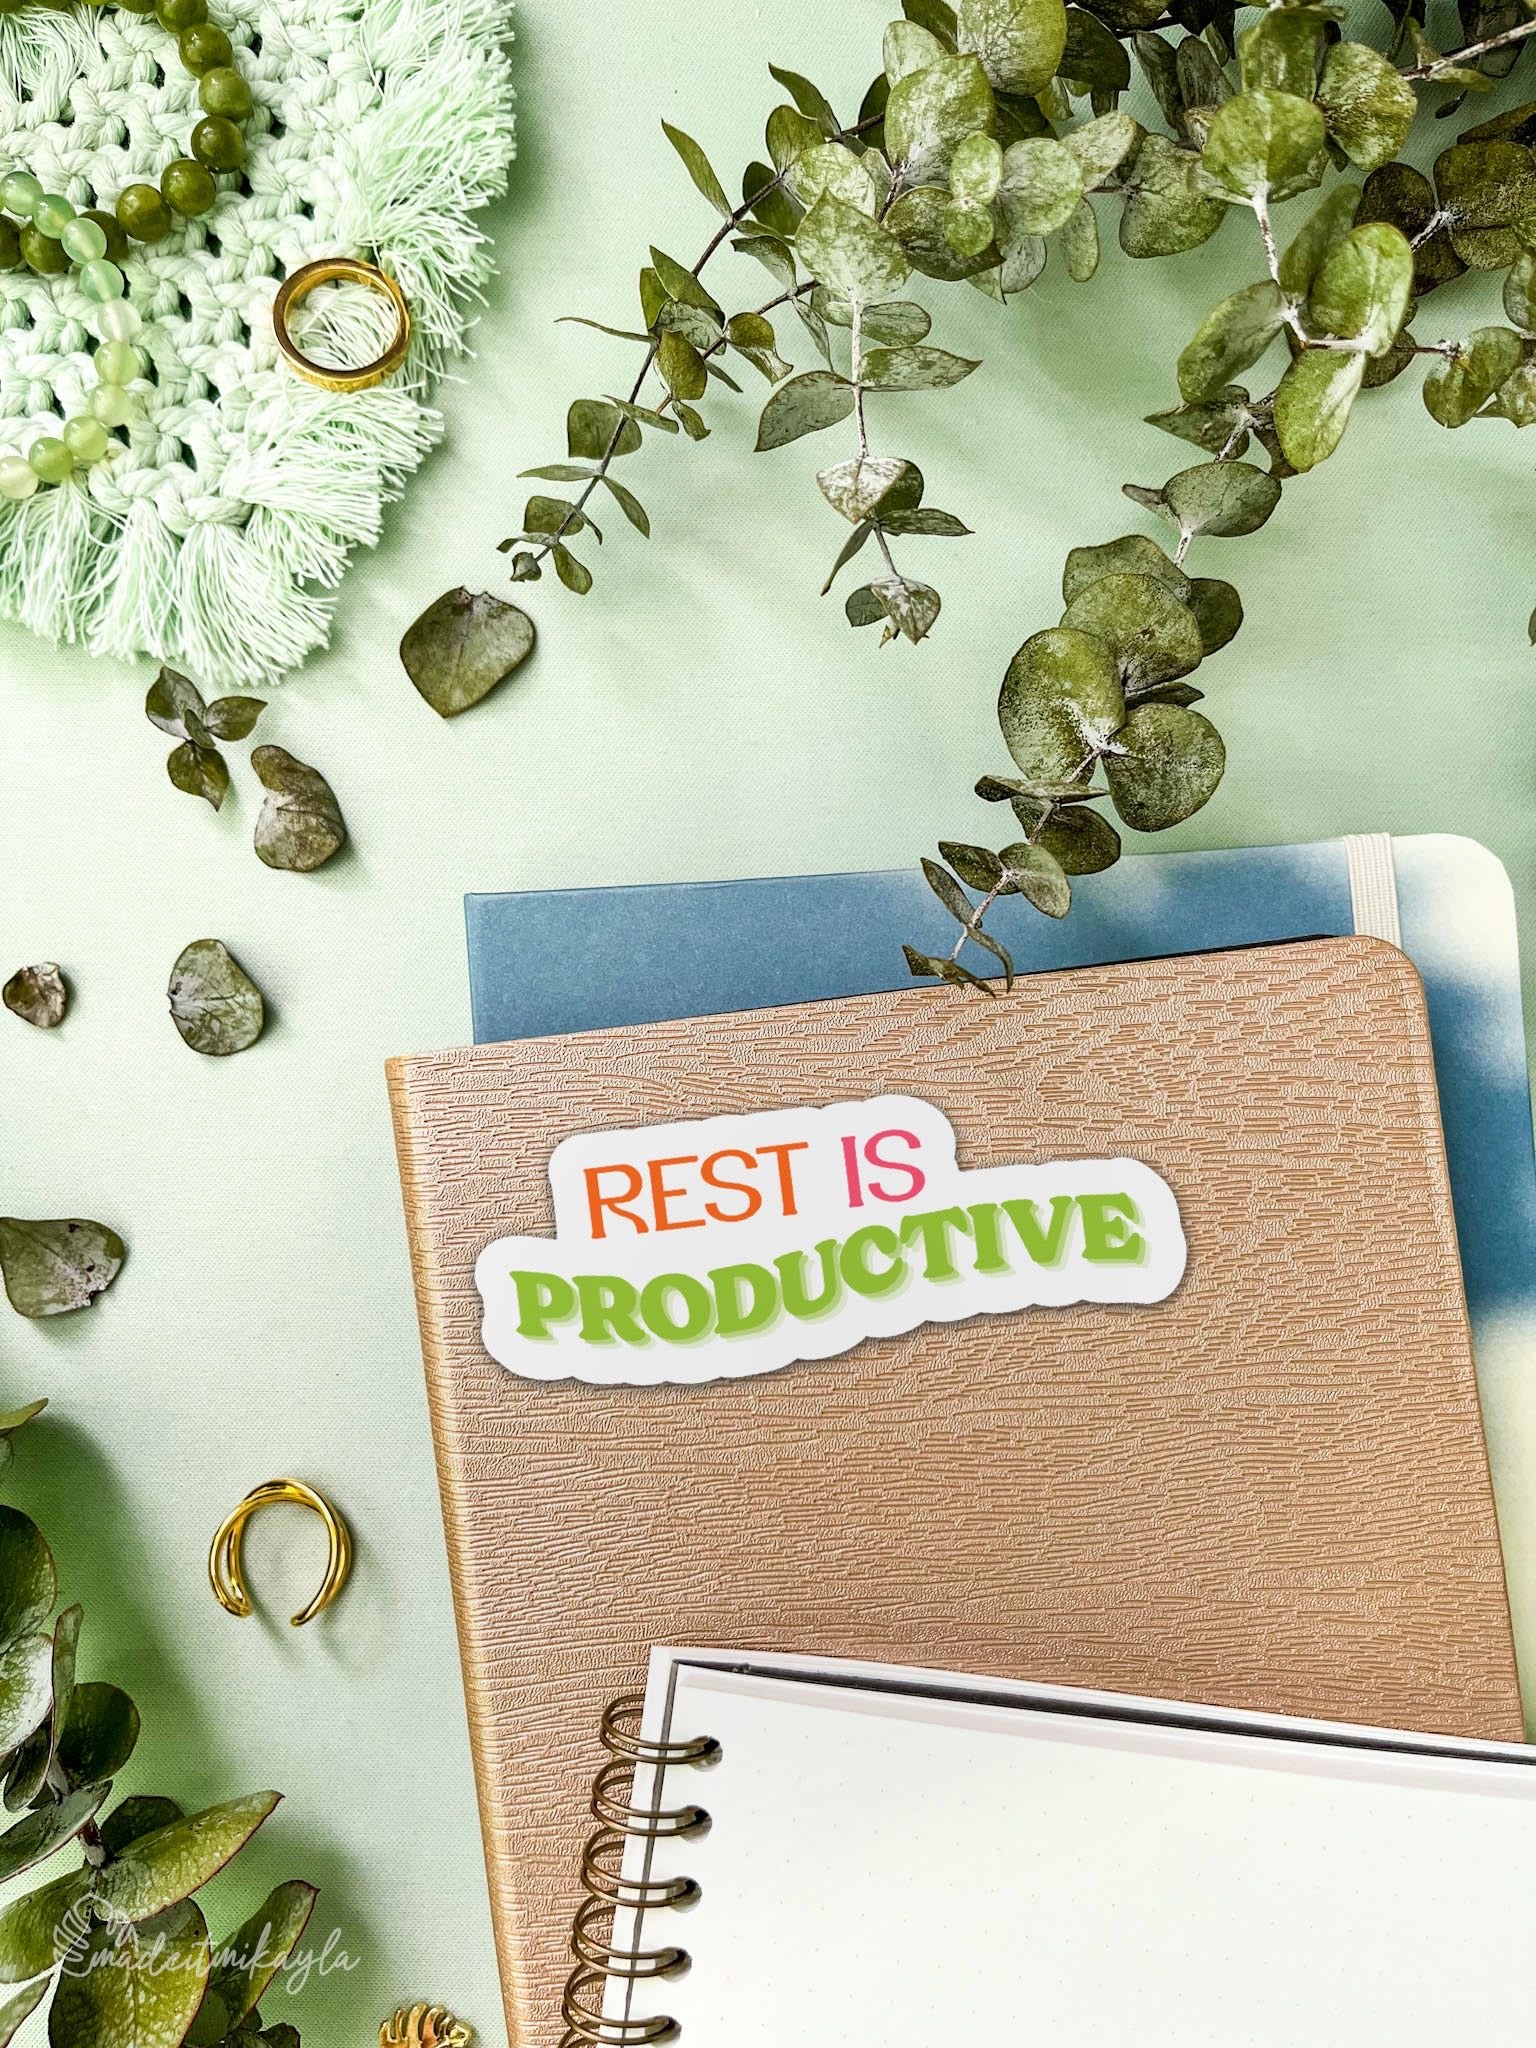 Rest Is Productive Sticker | MadeItMikayla